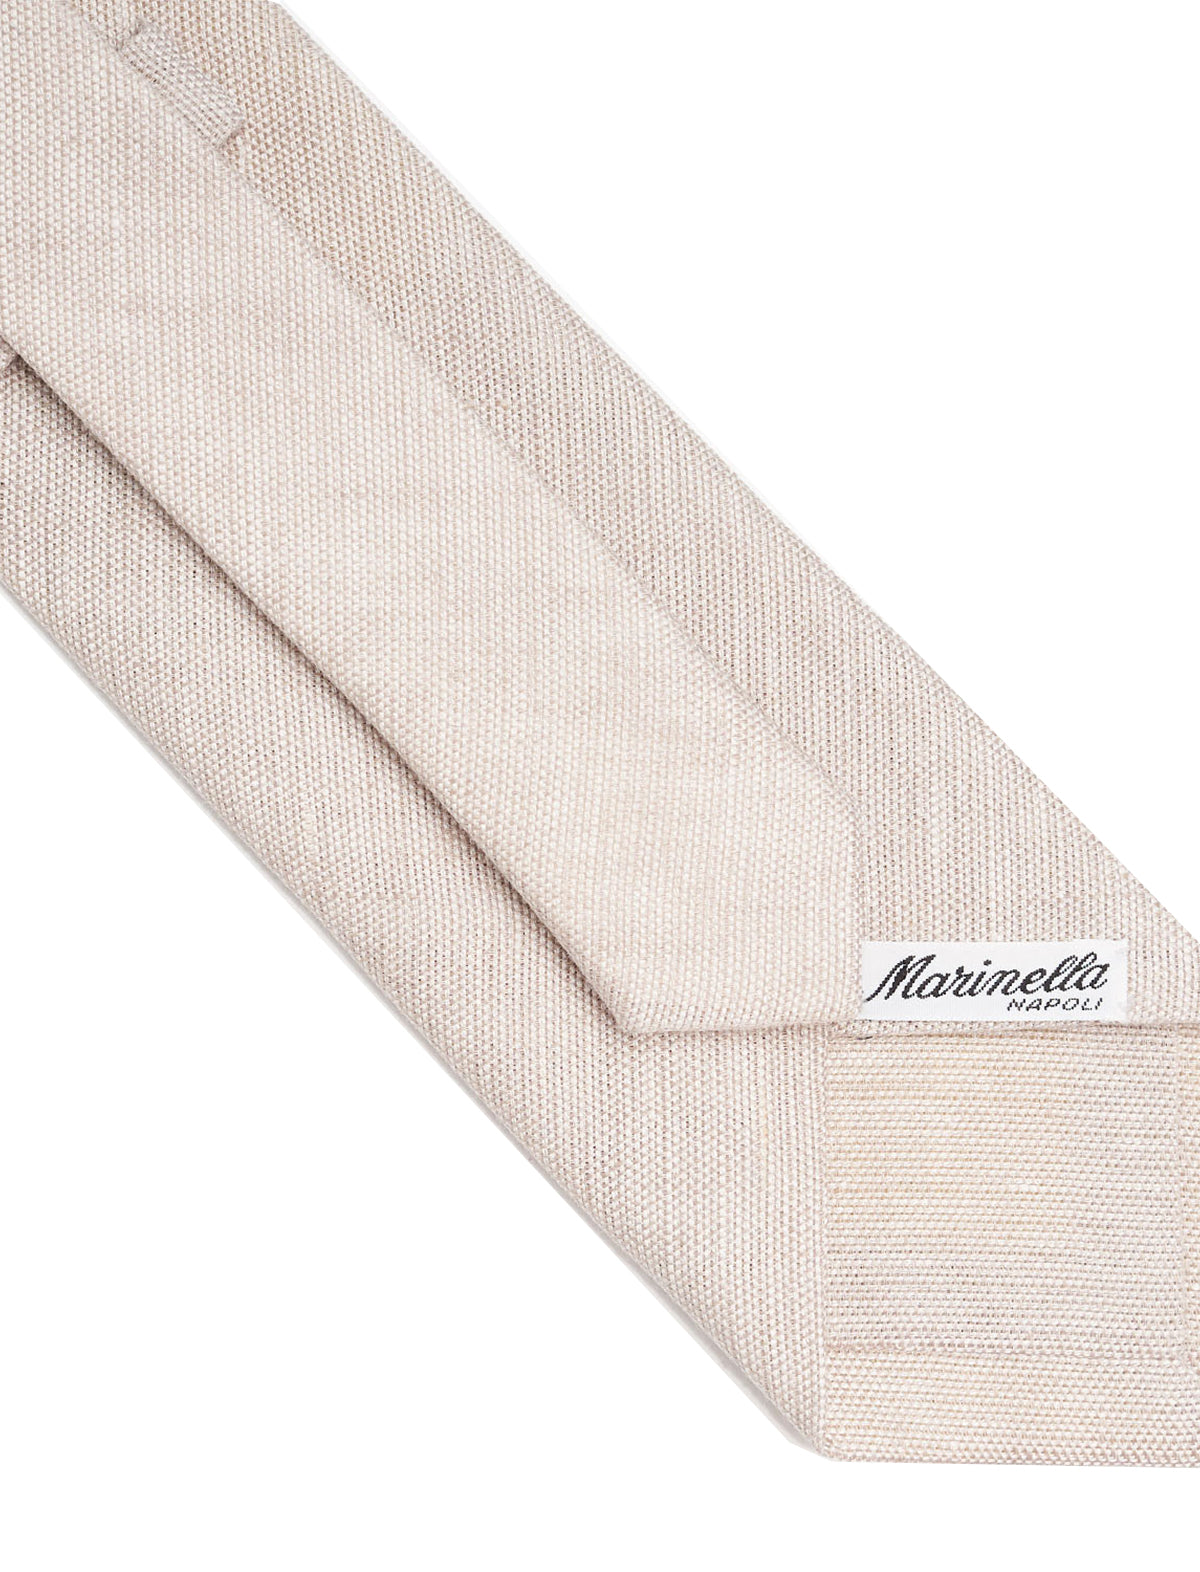 E.Marinella Linen Tie in Light Beige